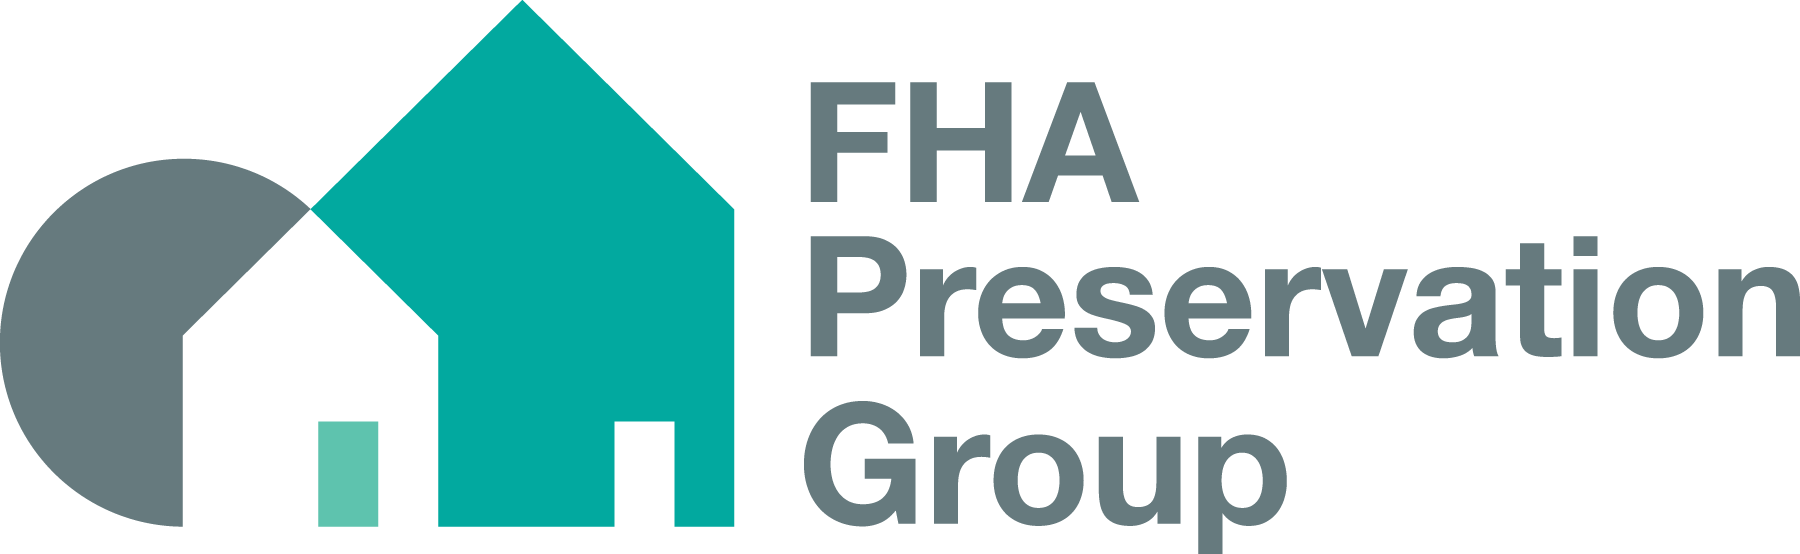 FHA Logo - Home - FHA Preservation Group